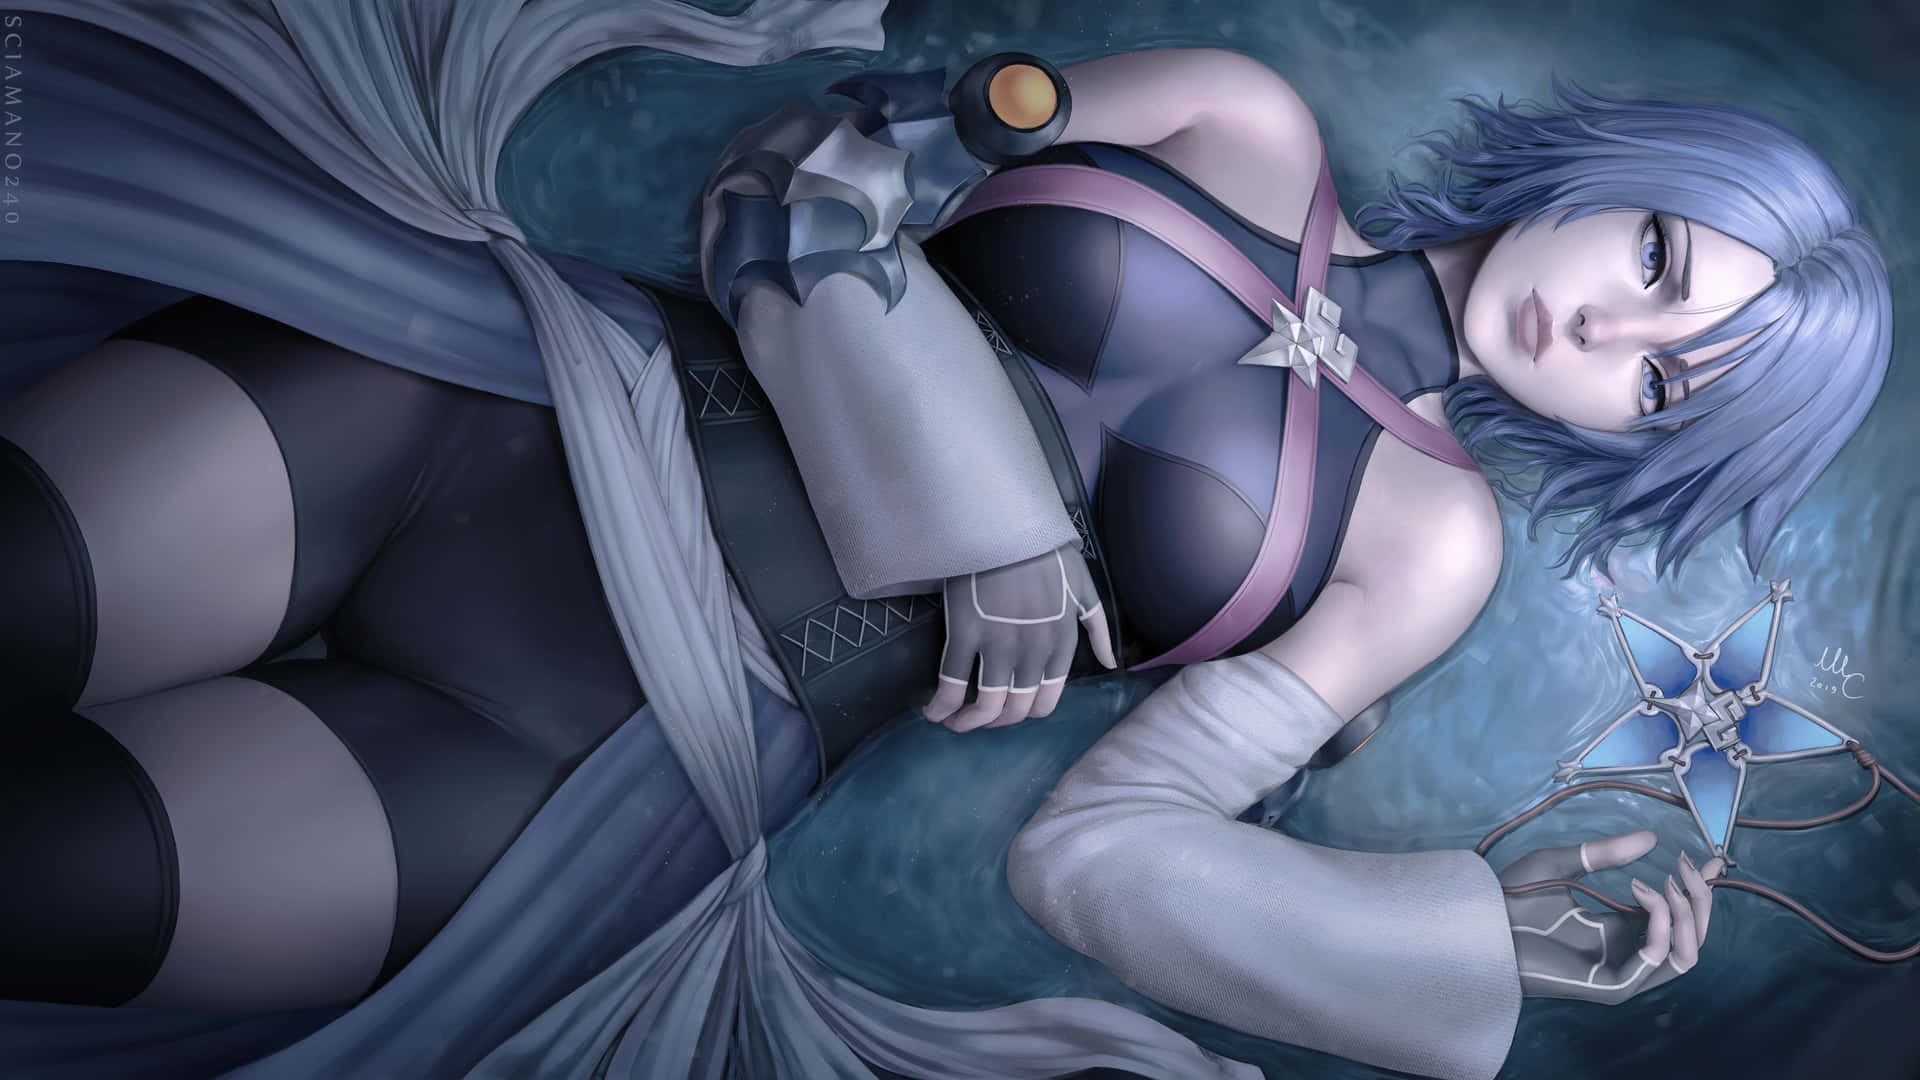 Aqua fights for her friends in Kingdom Hearts. Wallpaper